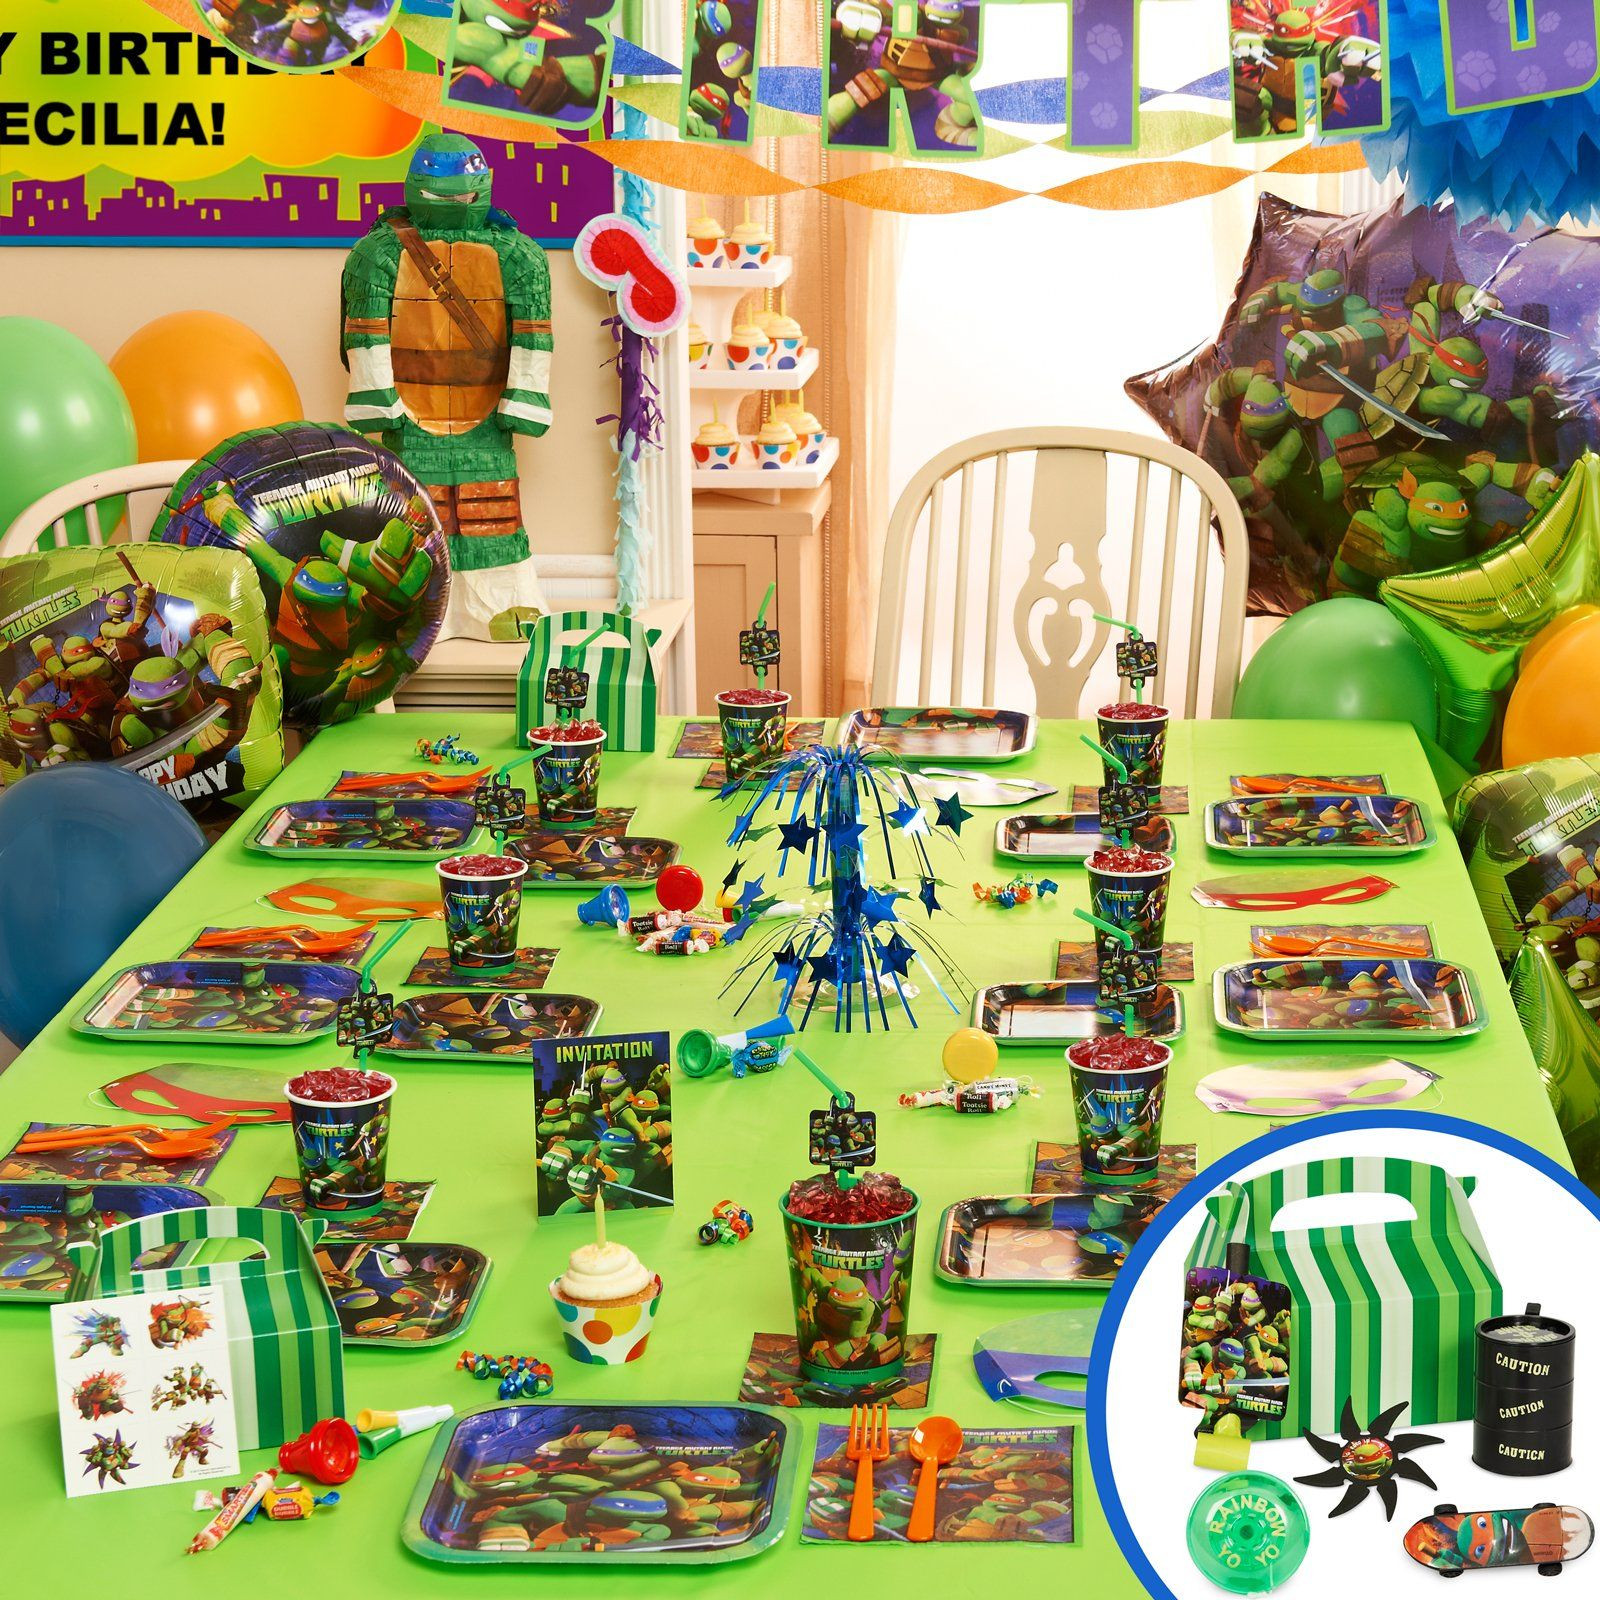 Ninja Turtle Birthday Party Decorations
 Teenage Mutant Ninja Turtles Party Supplies